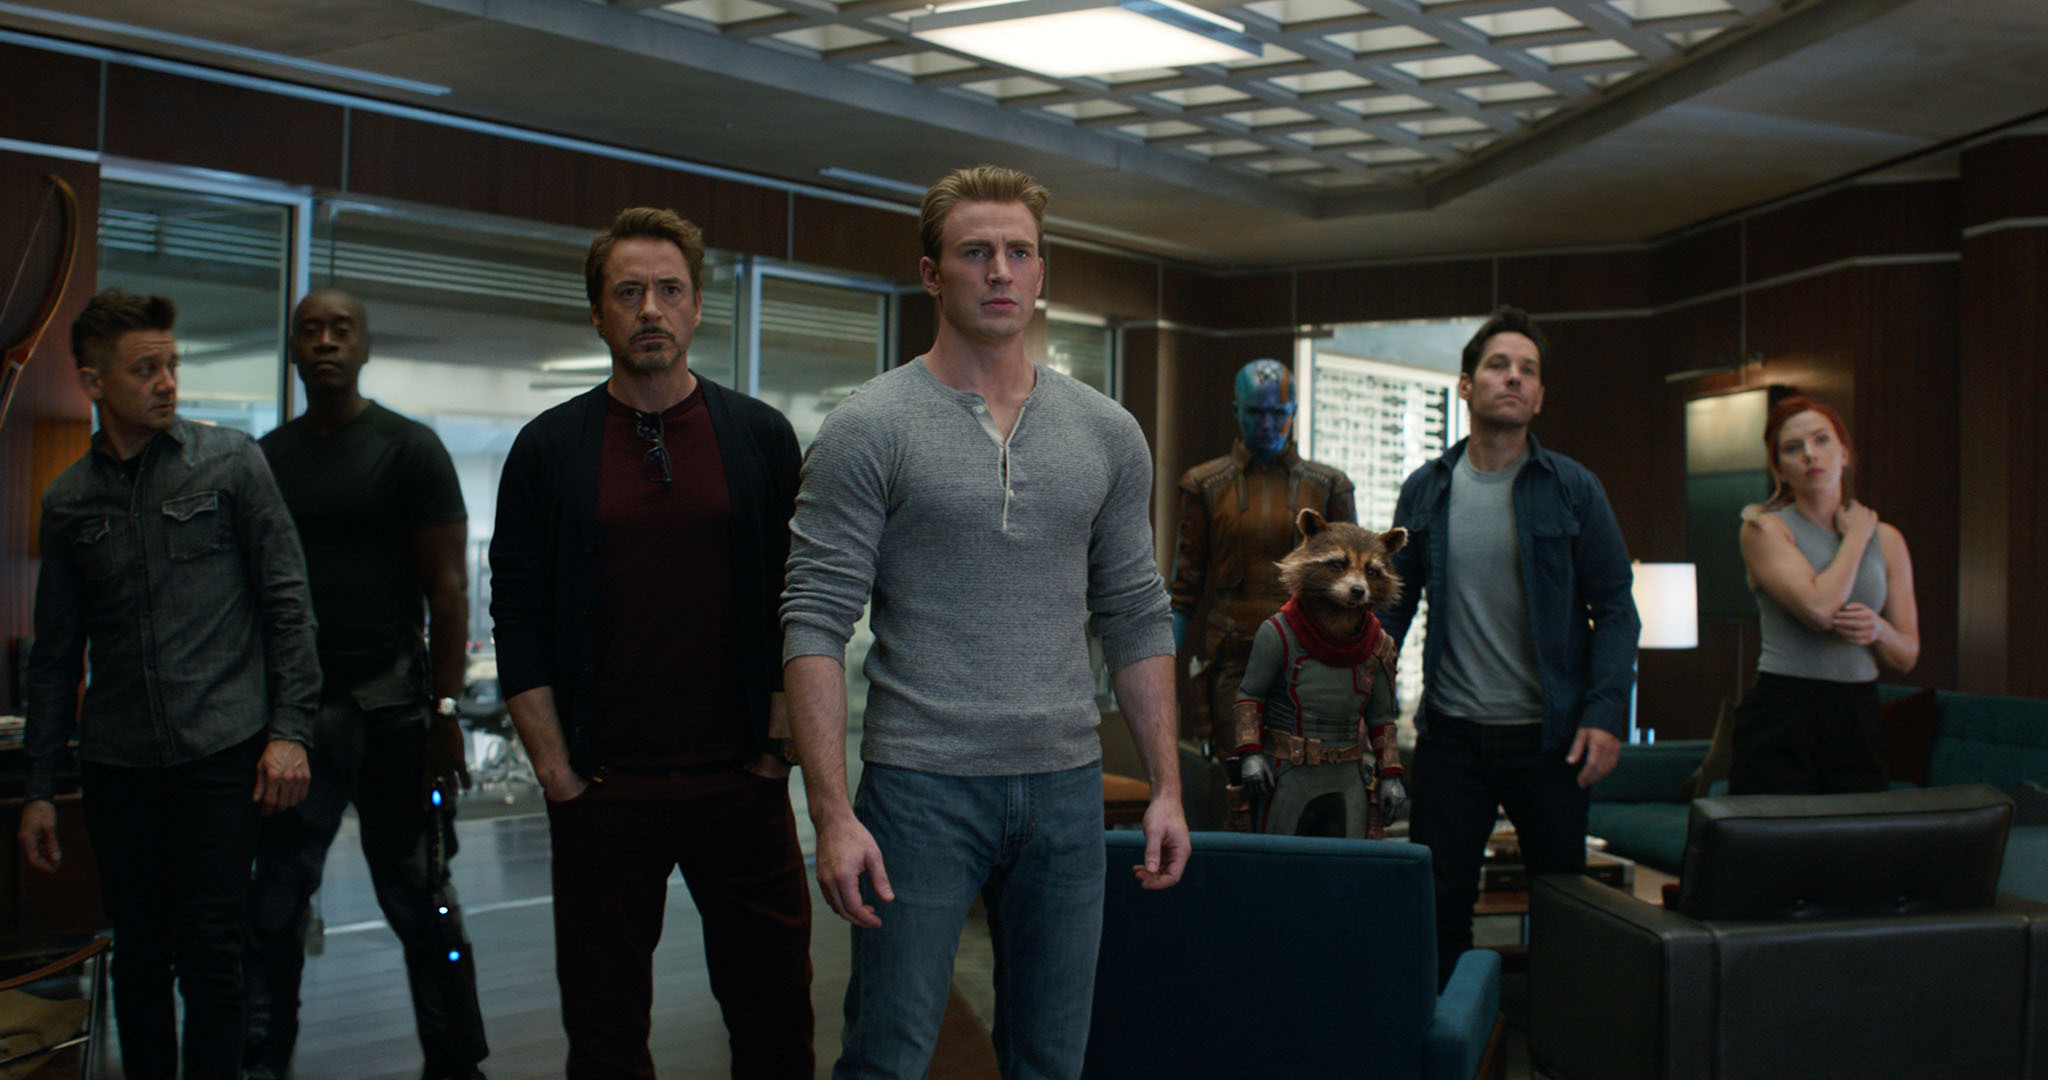 'Avengers: Endgame' sets multiple records at box office